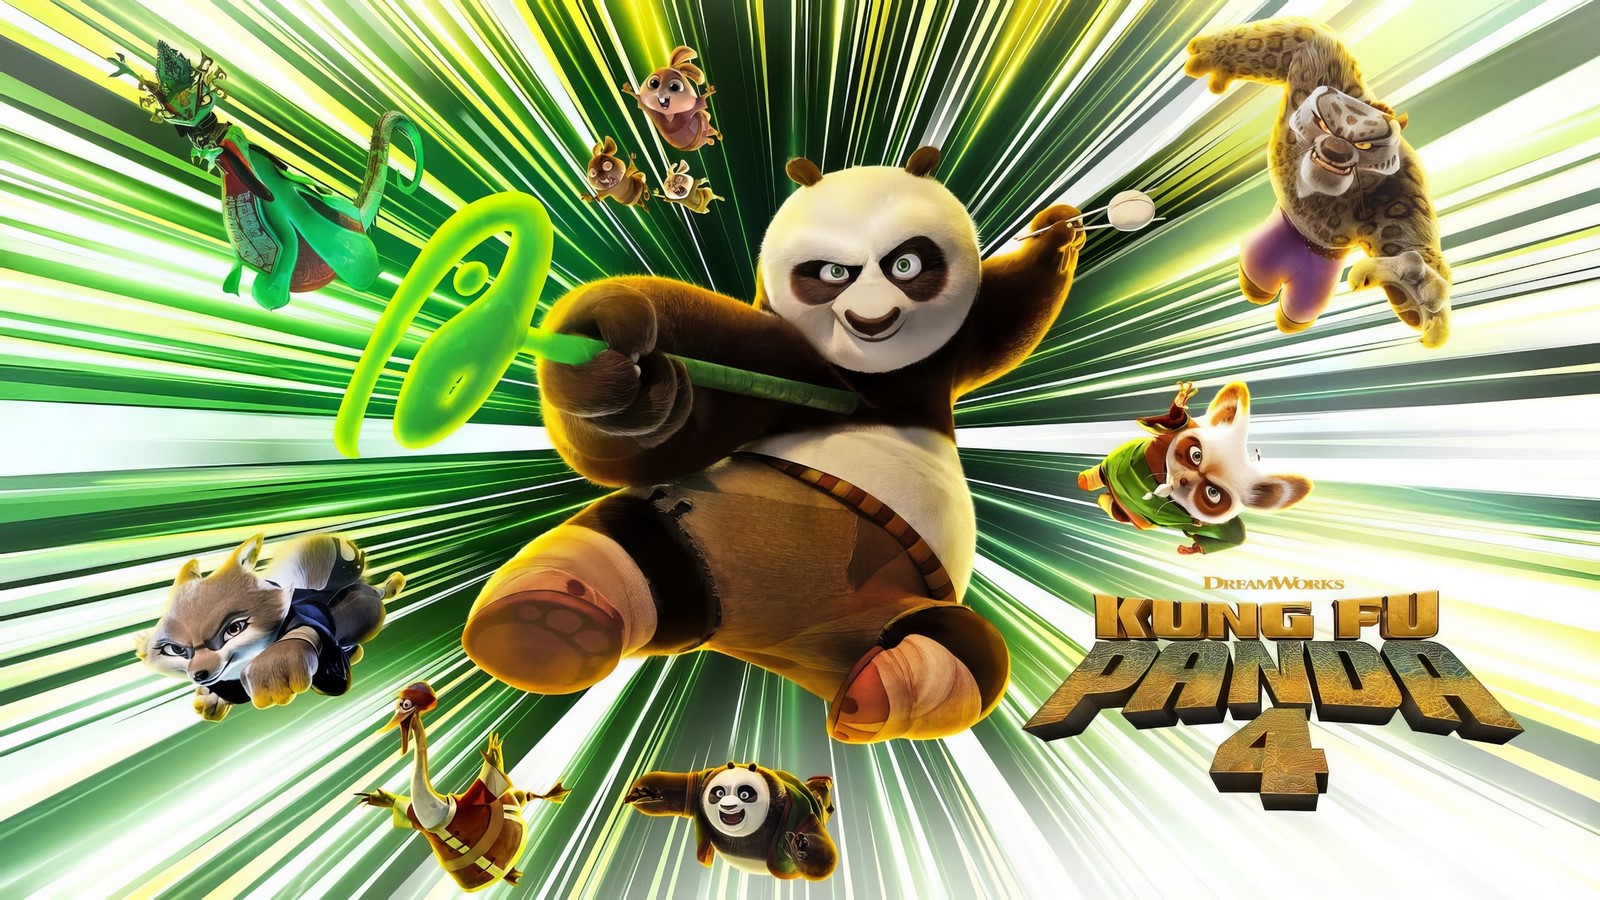 Kung fu panda 4 in testa al box office usa